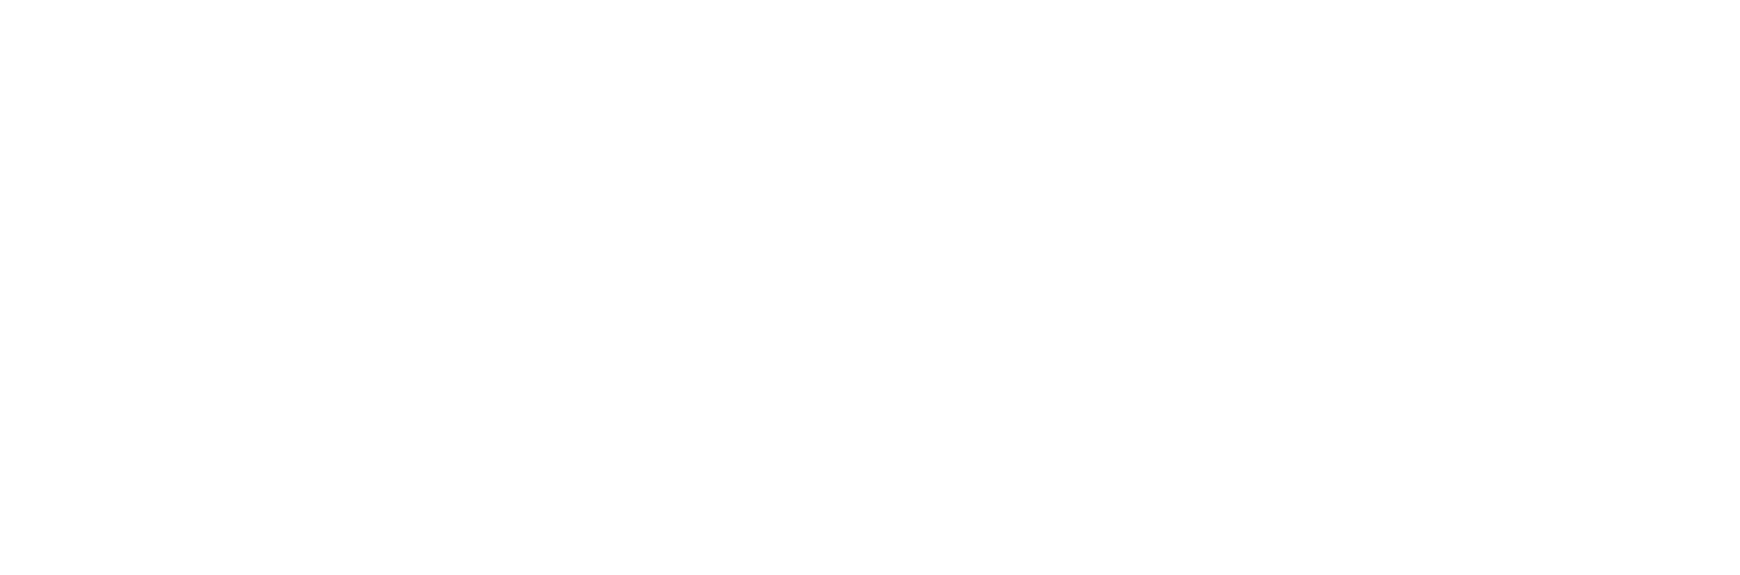 Lincolnshire county council logo